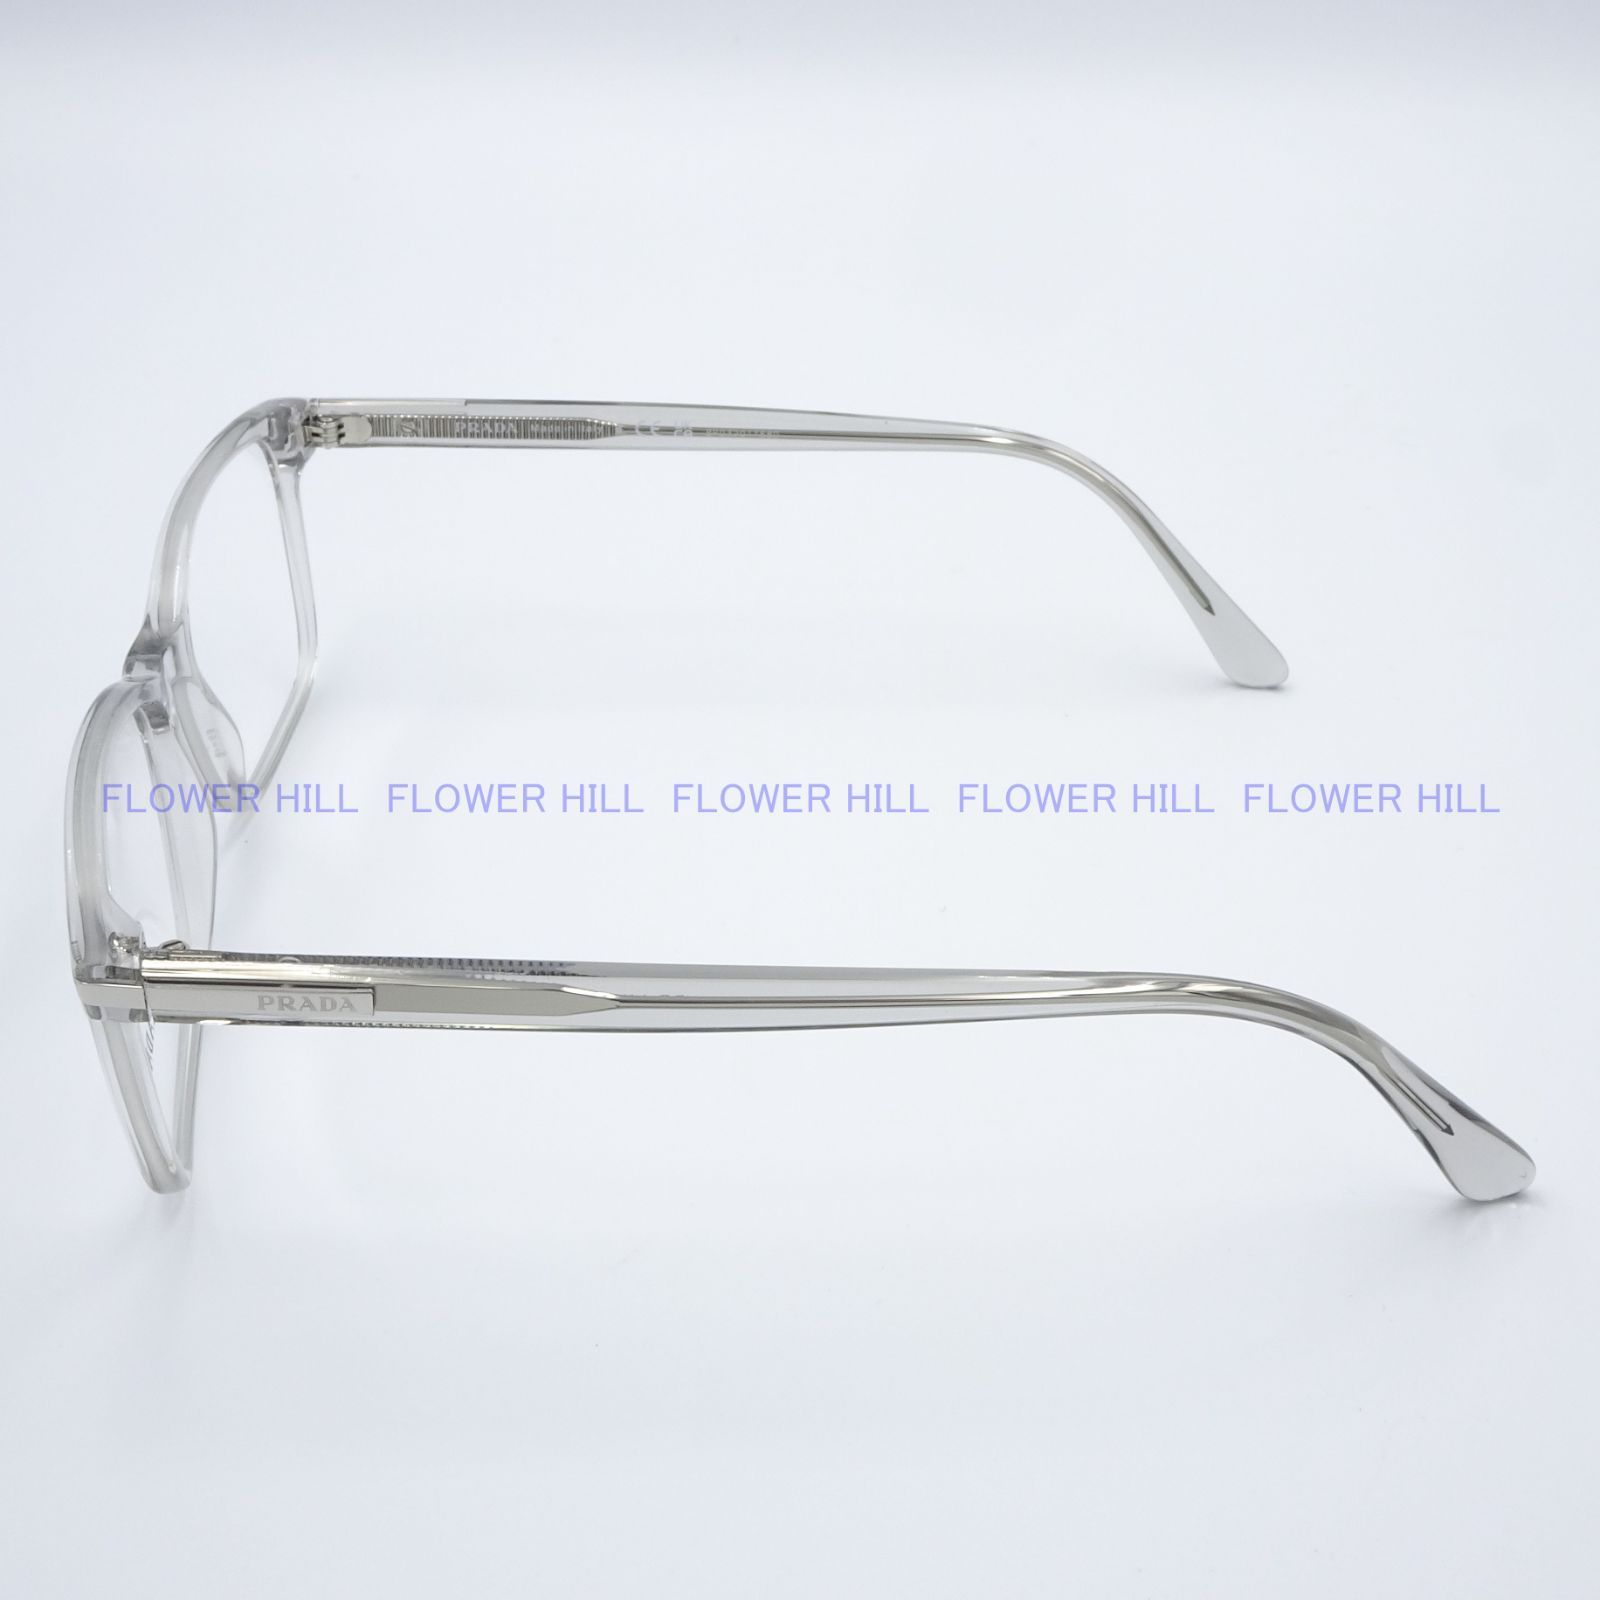 PRADA プラダ メガネ フレーム VPR14W U43-1O1 クリアー イタリア製 メンズ レディース めがね 眼鏡